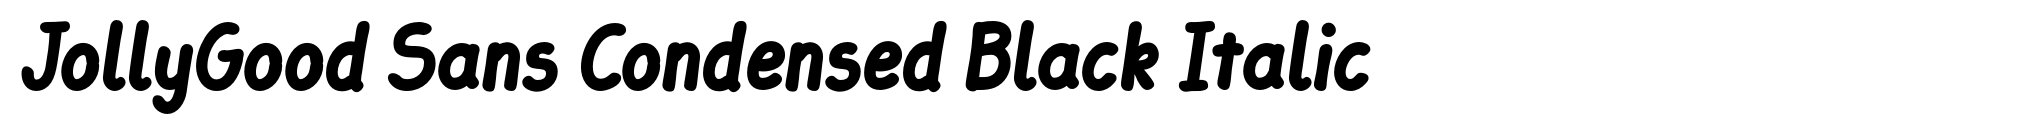 JollyGood Sans Condensed Black Italic image